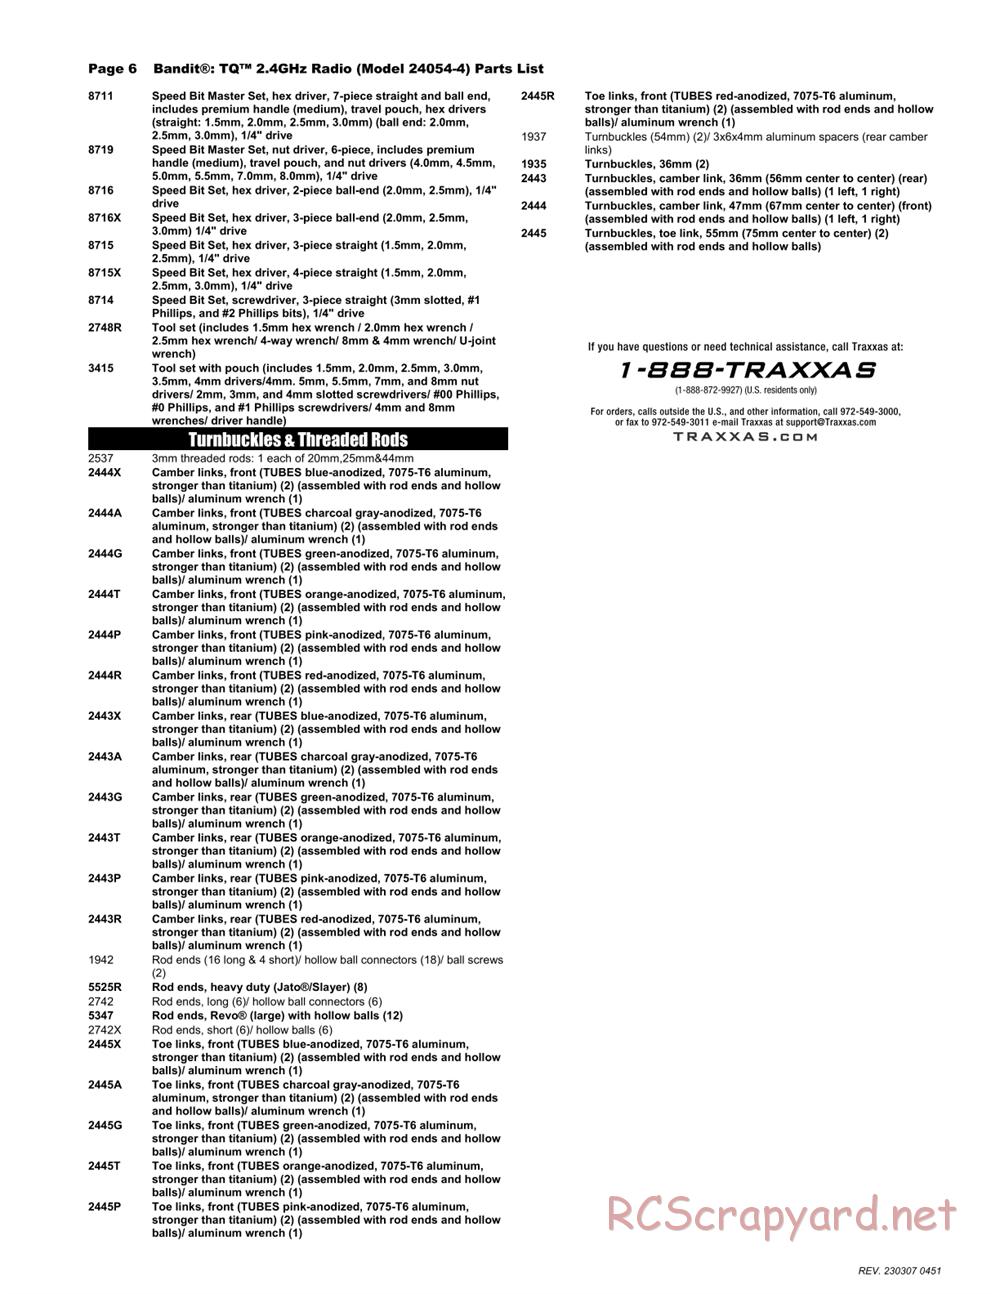 Traxxas - Bandit XL-5 (2018) - Parts List - Page 6